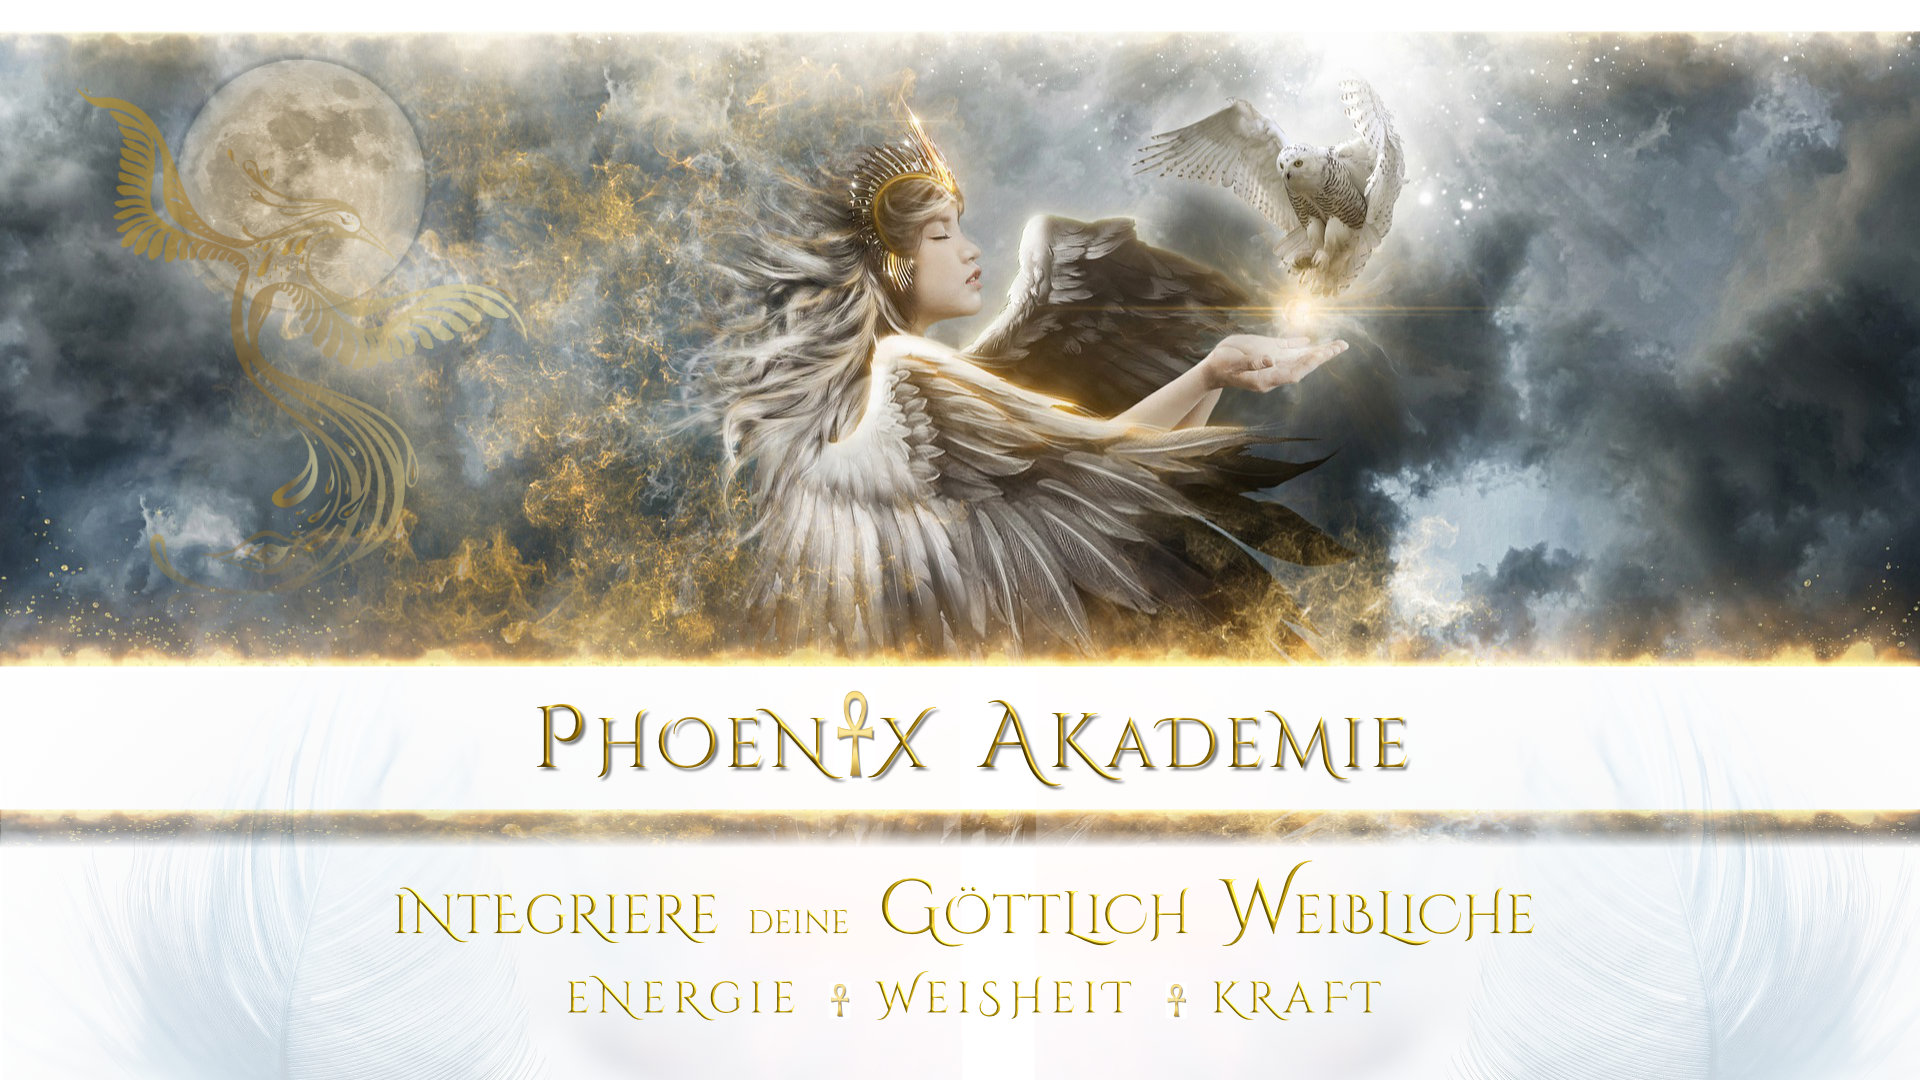 Phoenix Akademie